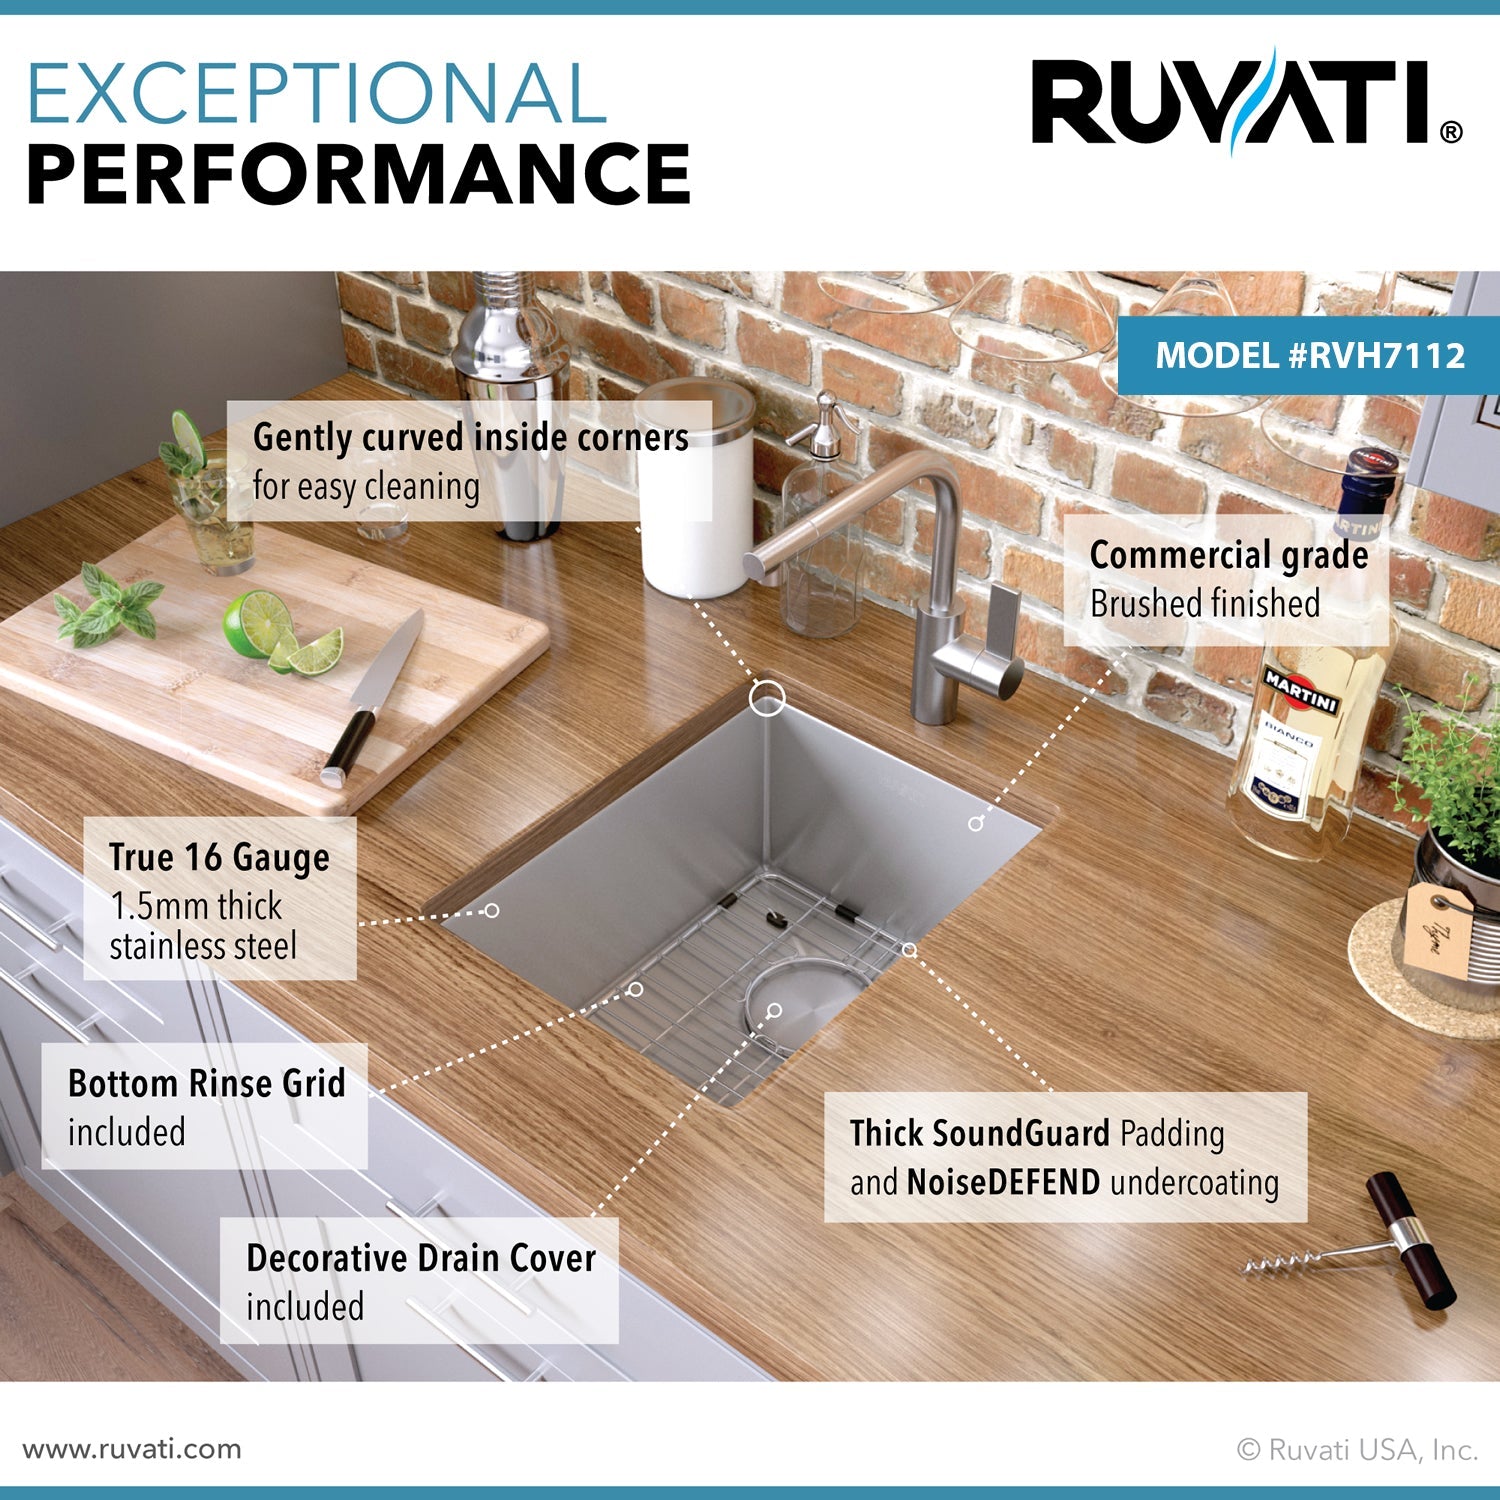 Benefits of Ruvati's Decorative Drain Cover - Ruvati USA